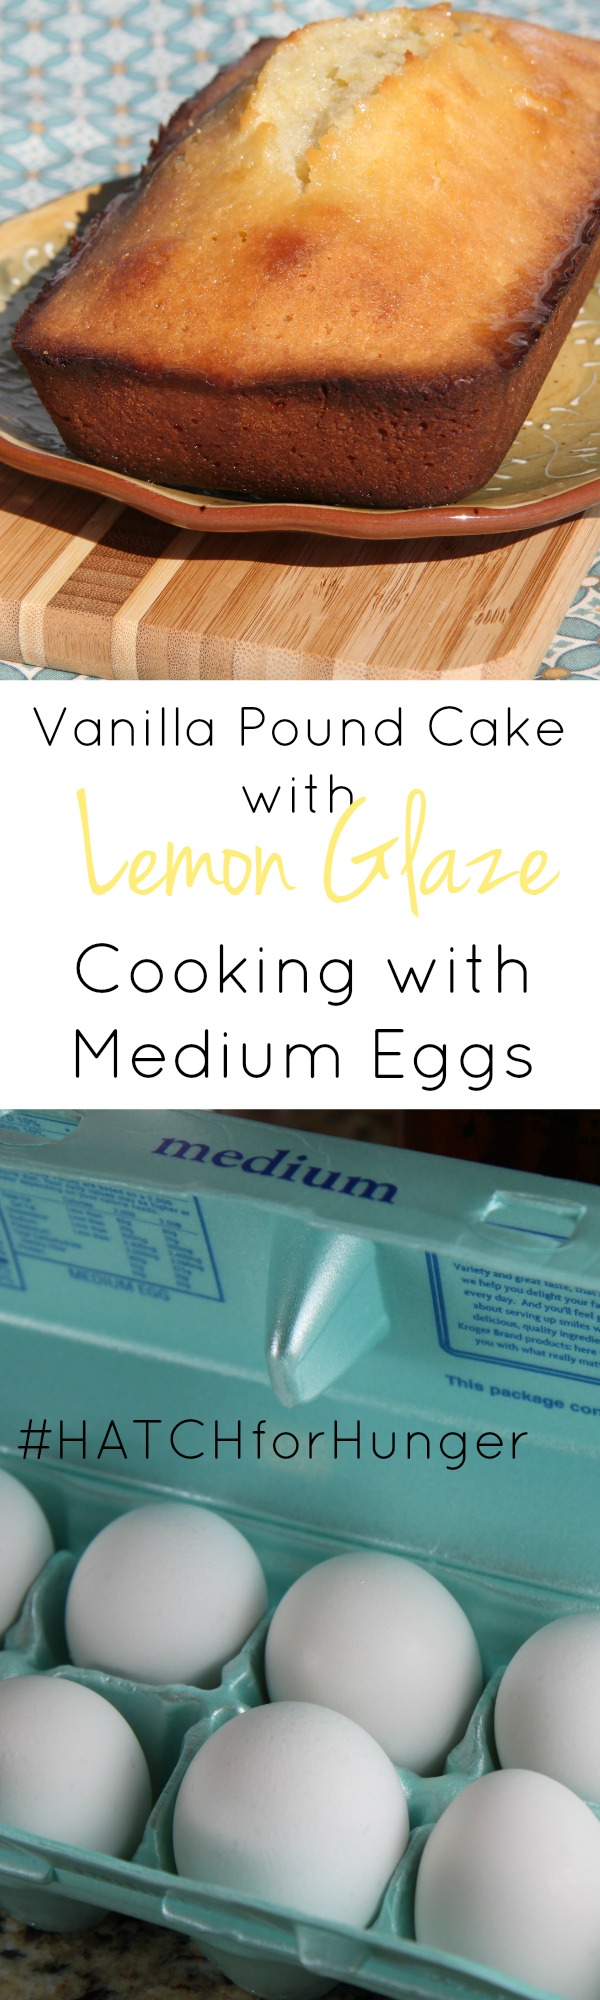 Vanilla Pound Cake with Lemon Glaze Recipe HatchforHunger